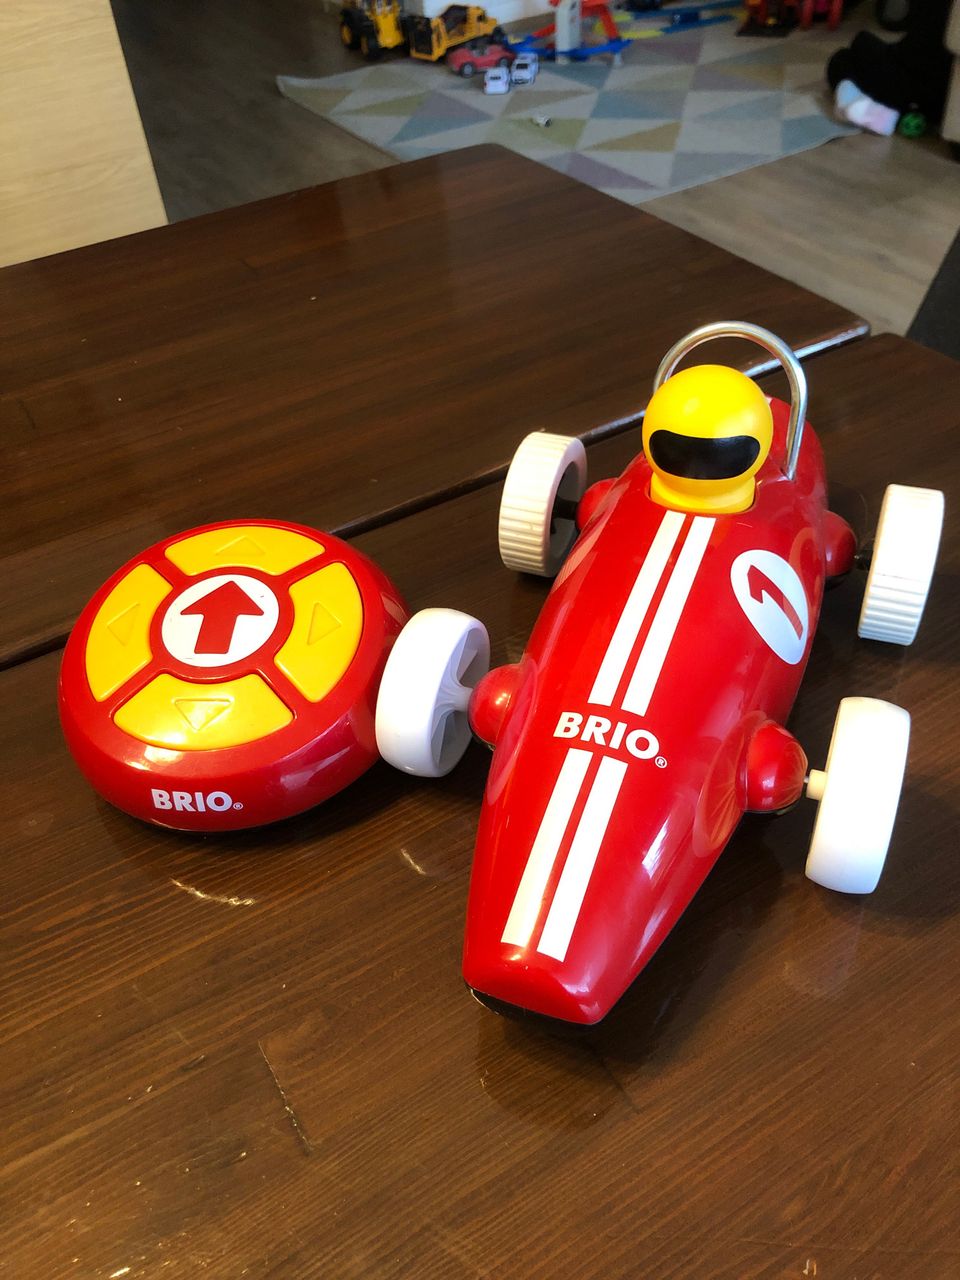 Brio RC race car